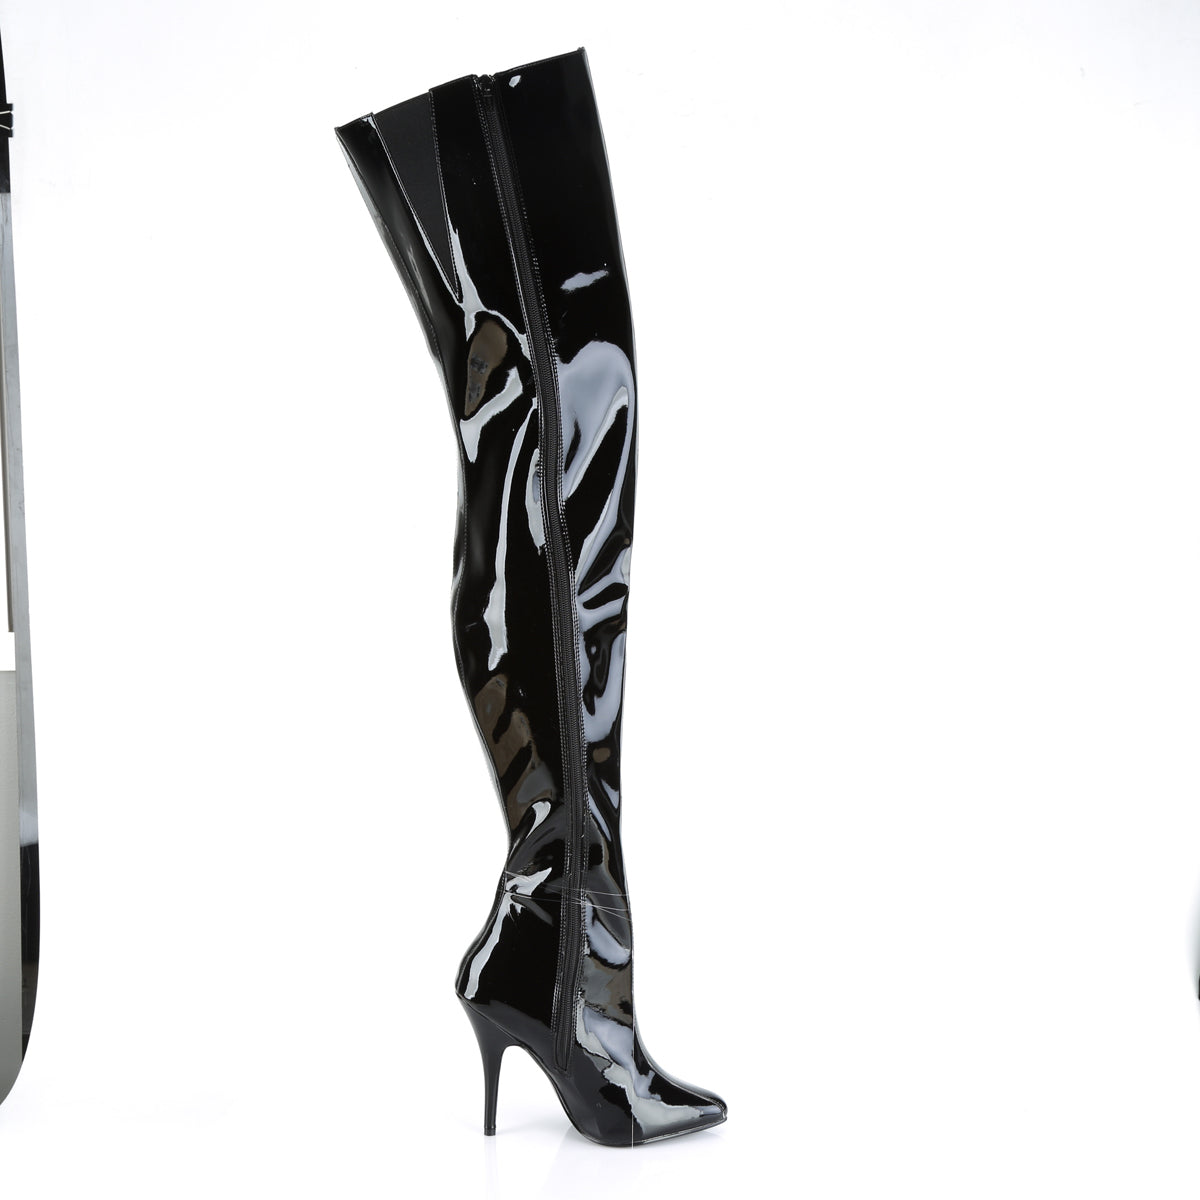 SEDUCE-4010 Chap Boots 5" Heel Black Patent Fetish Footwear-Pleaser- Sexy Shoes Fetish Heels